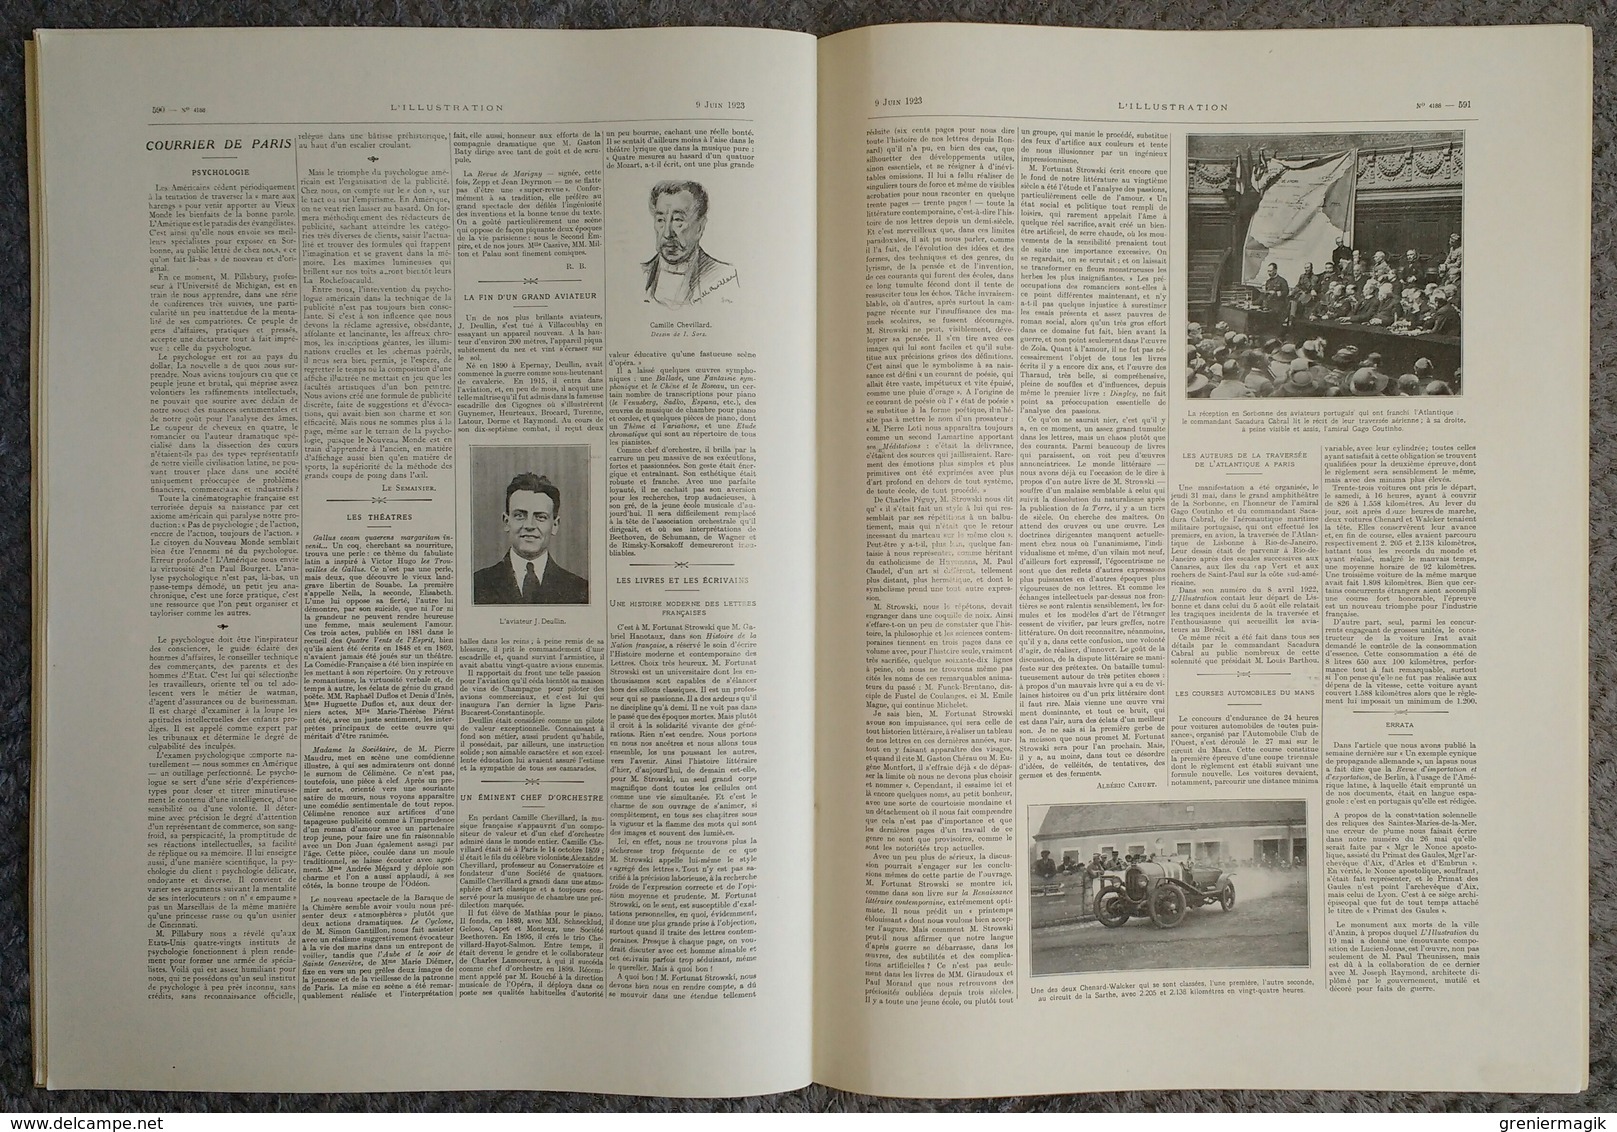 L'Illustration 4188 9 juin 1923 Chine mariage de l'empereur Suen-Tong/Strasbourg/Memorial day Suresnes/24H du Mans/